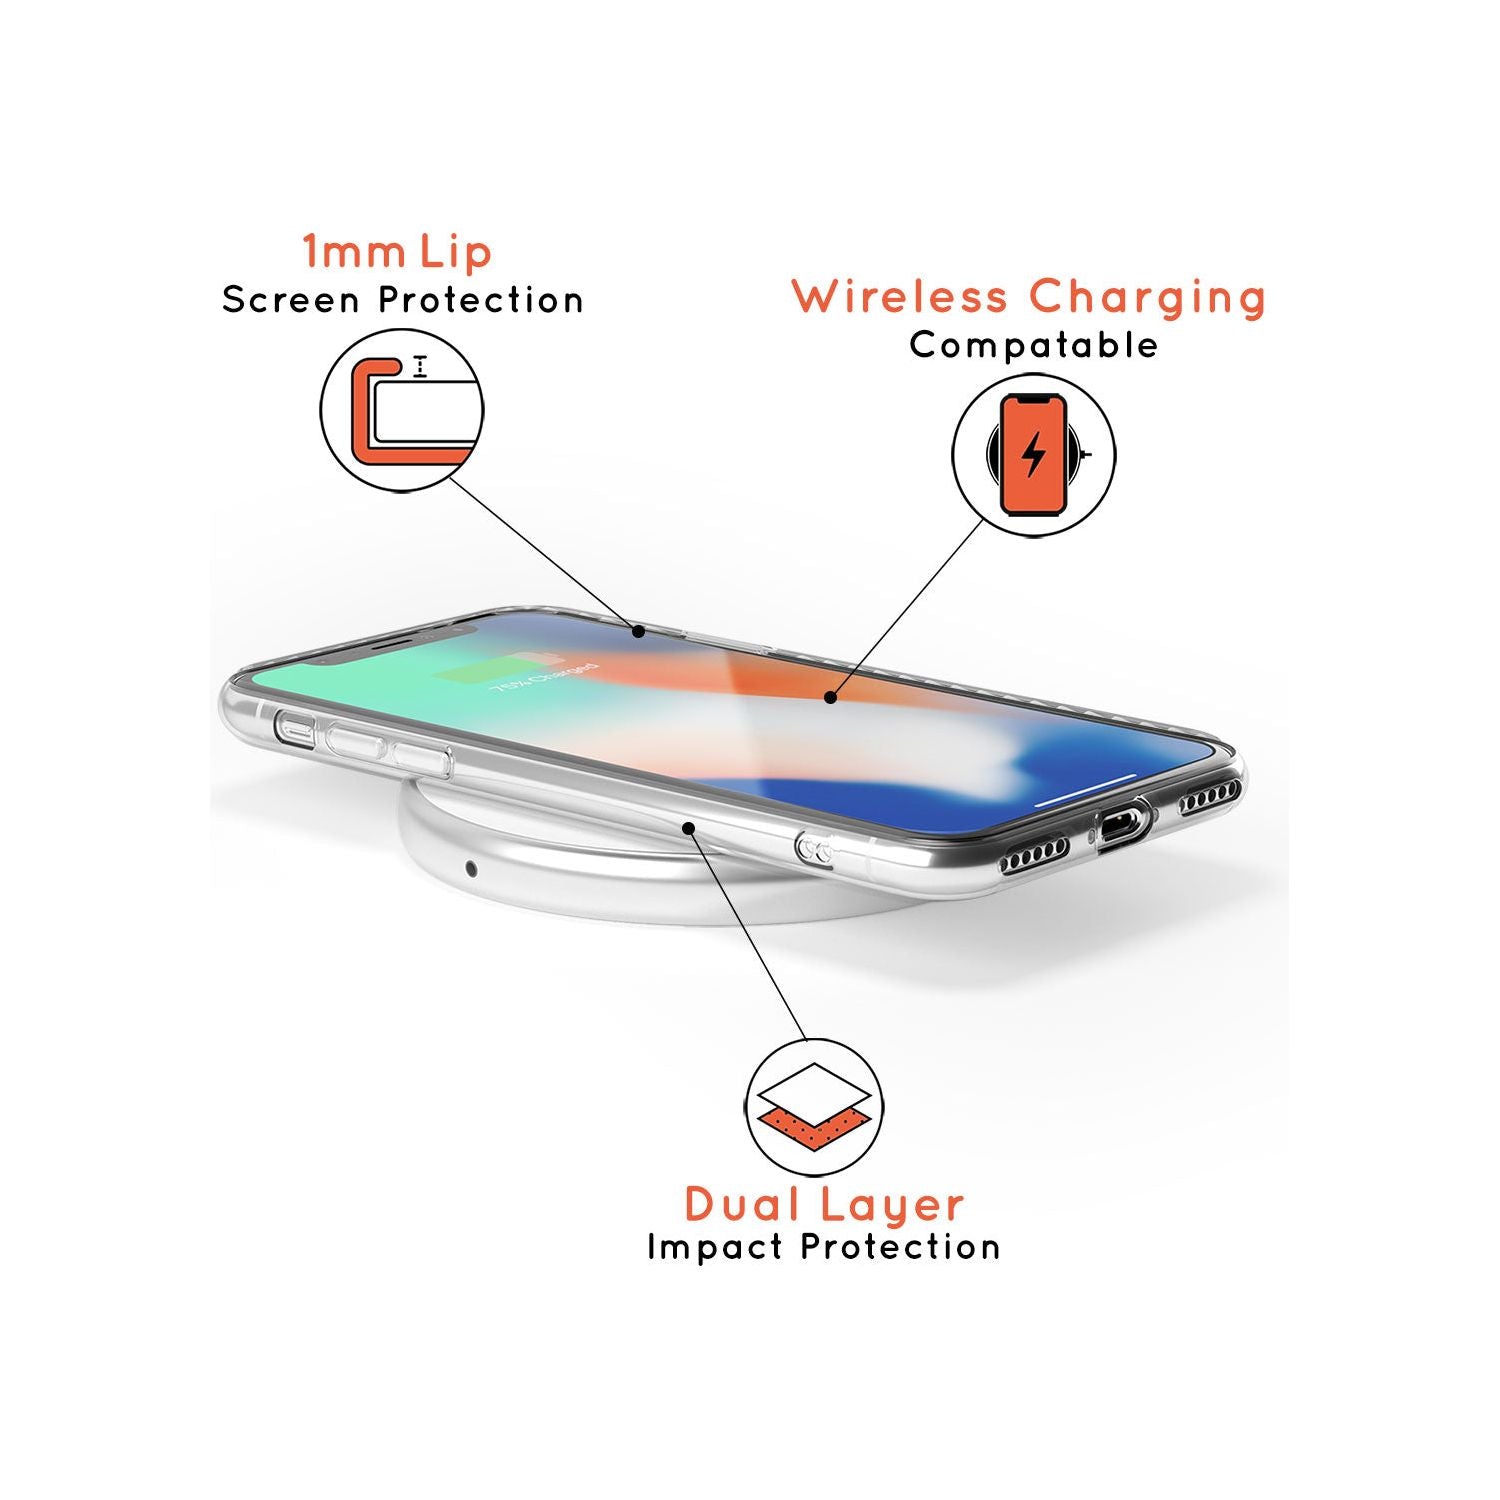 Pisces Emblem - Transparent Design Slim TPU Phone Case for iPhone 11 Pro Max